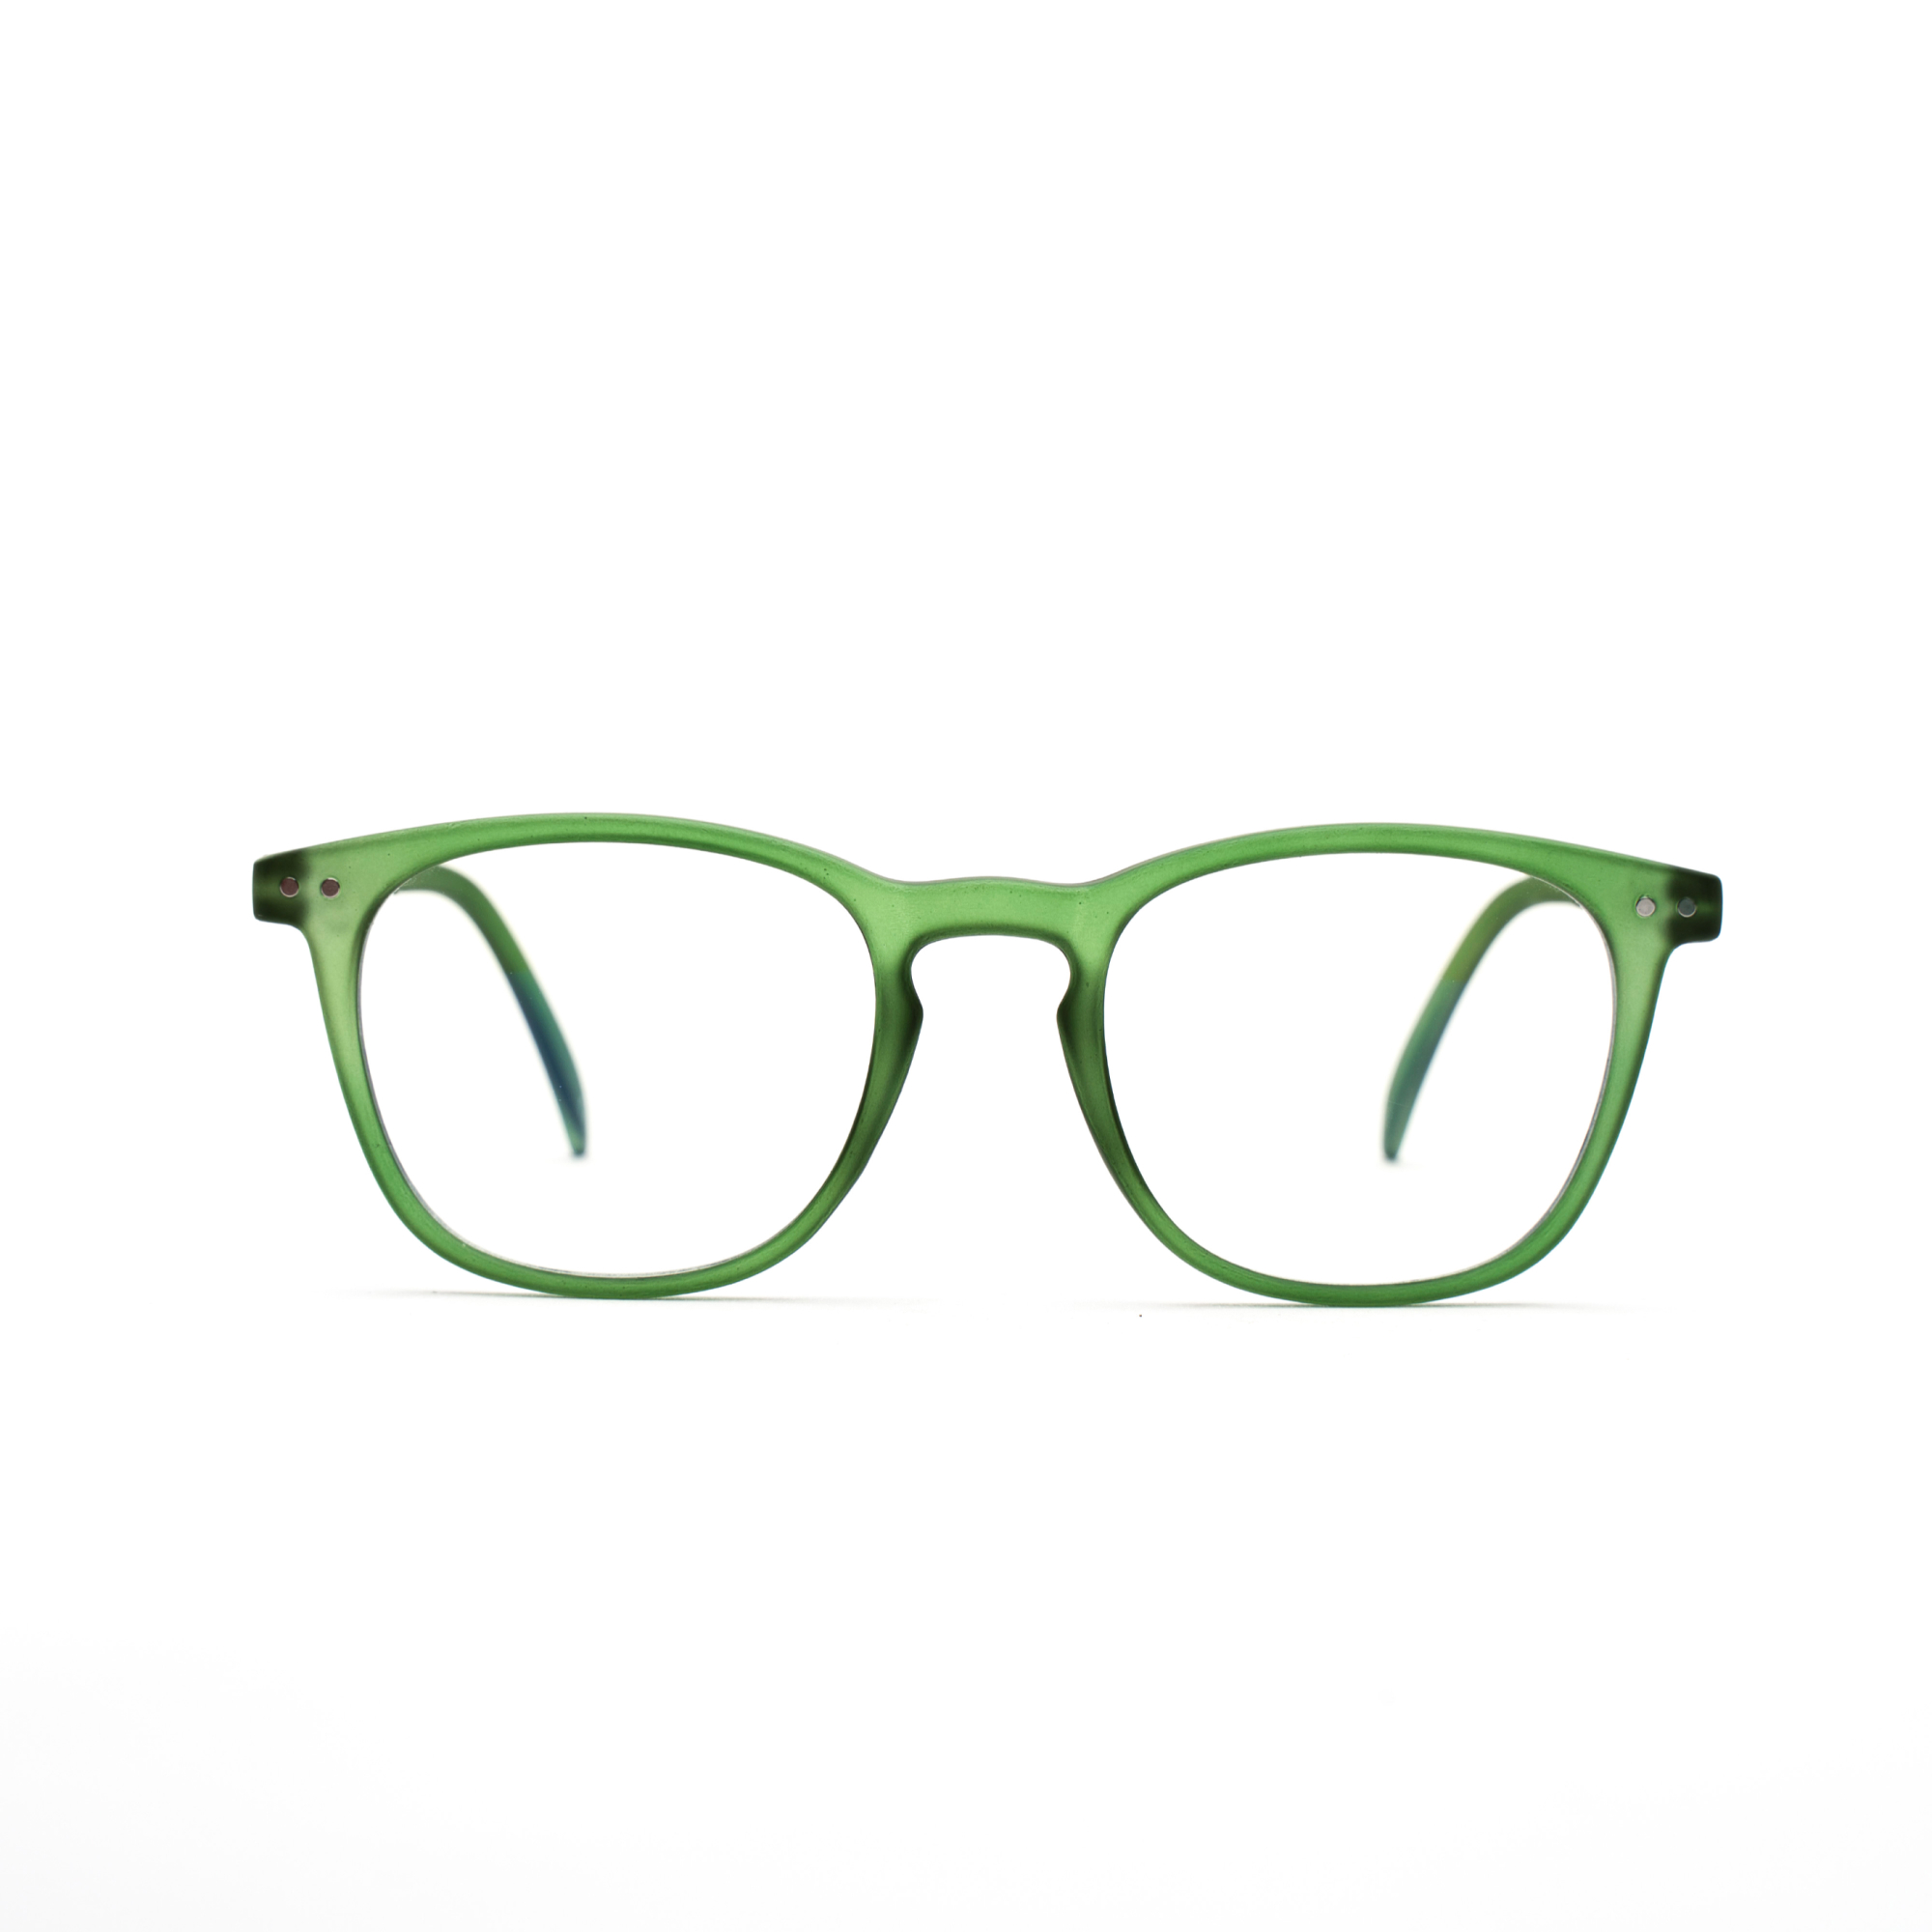 Men's reading glasses – William Ultimate m - Green